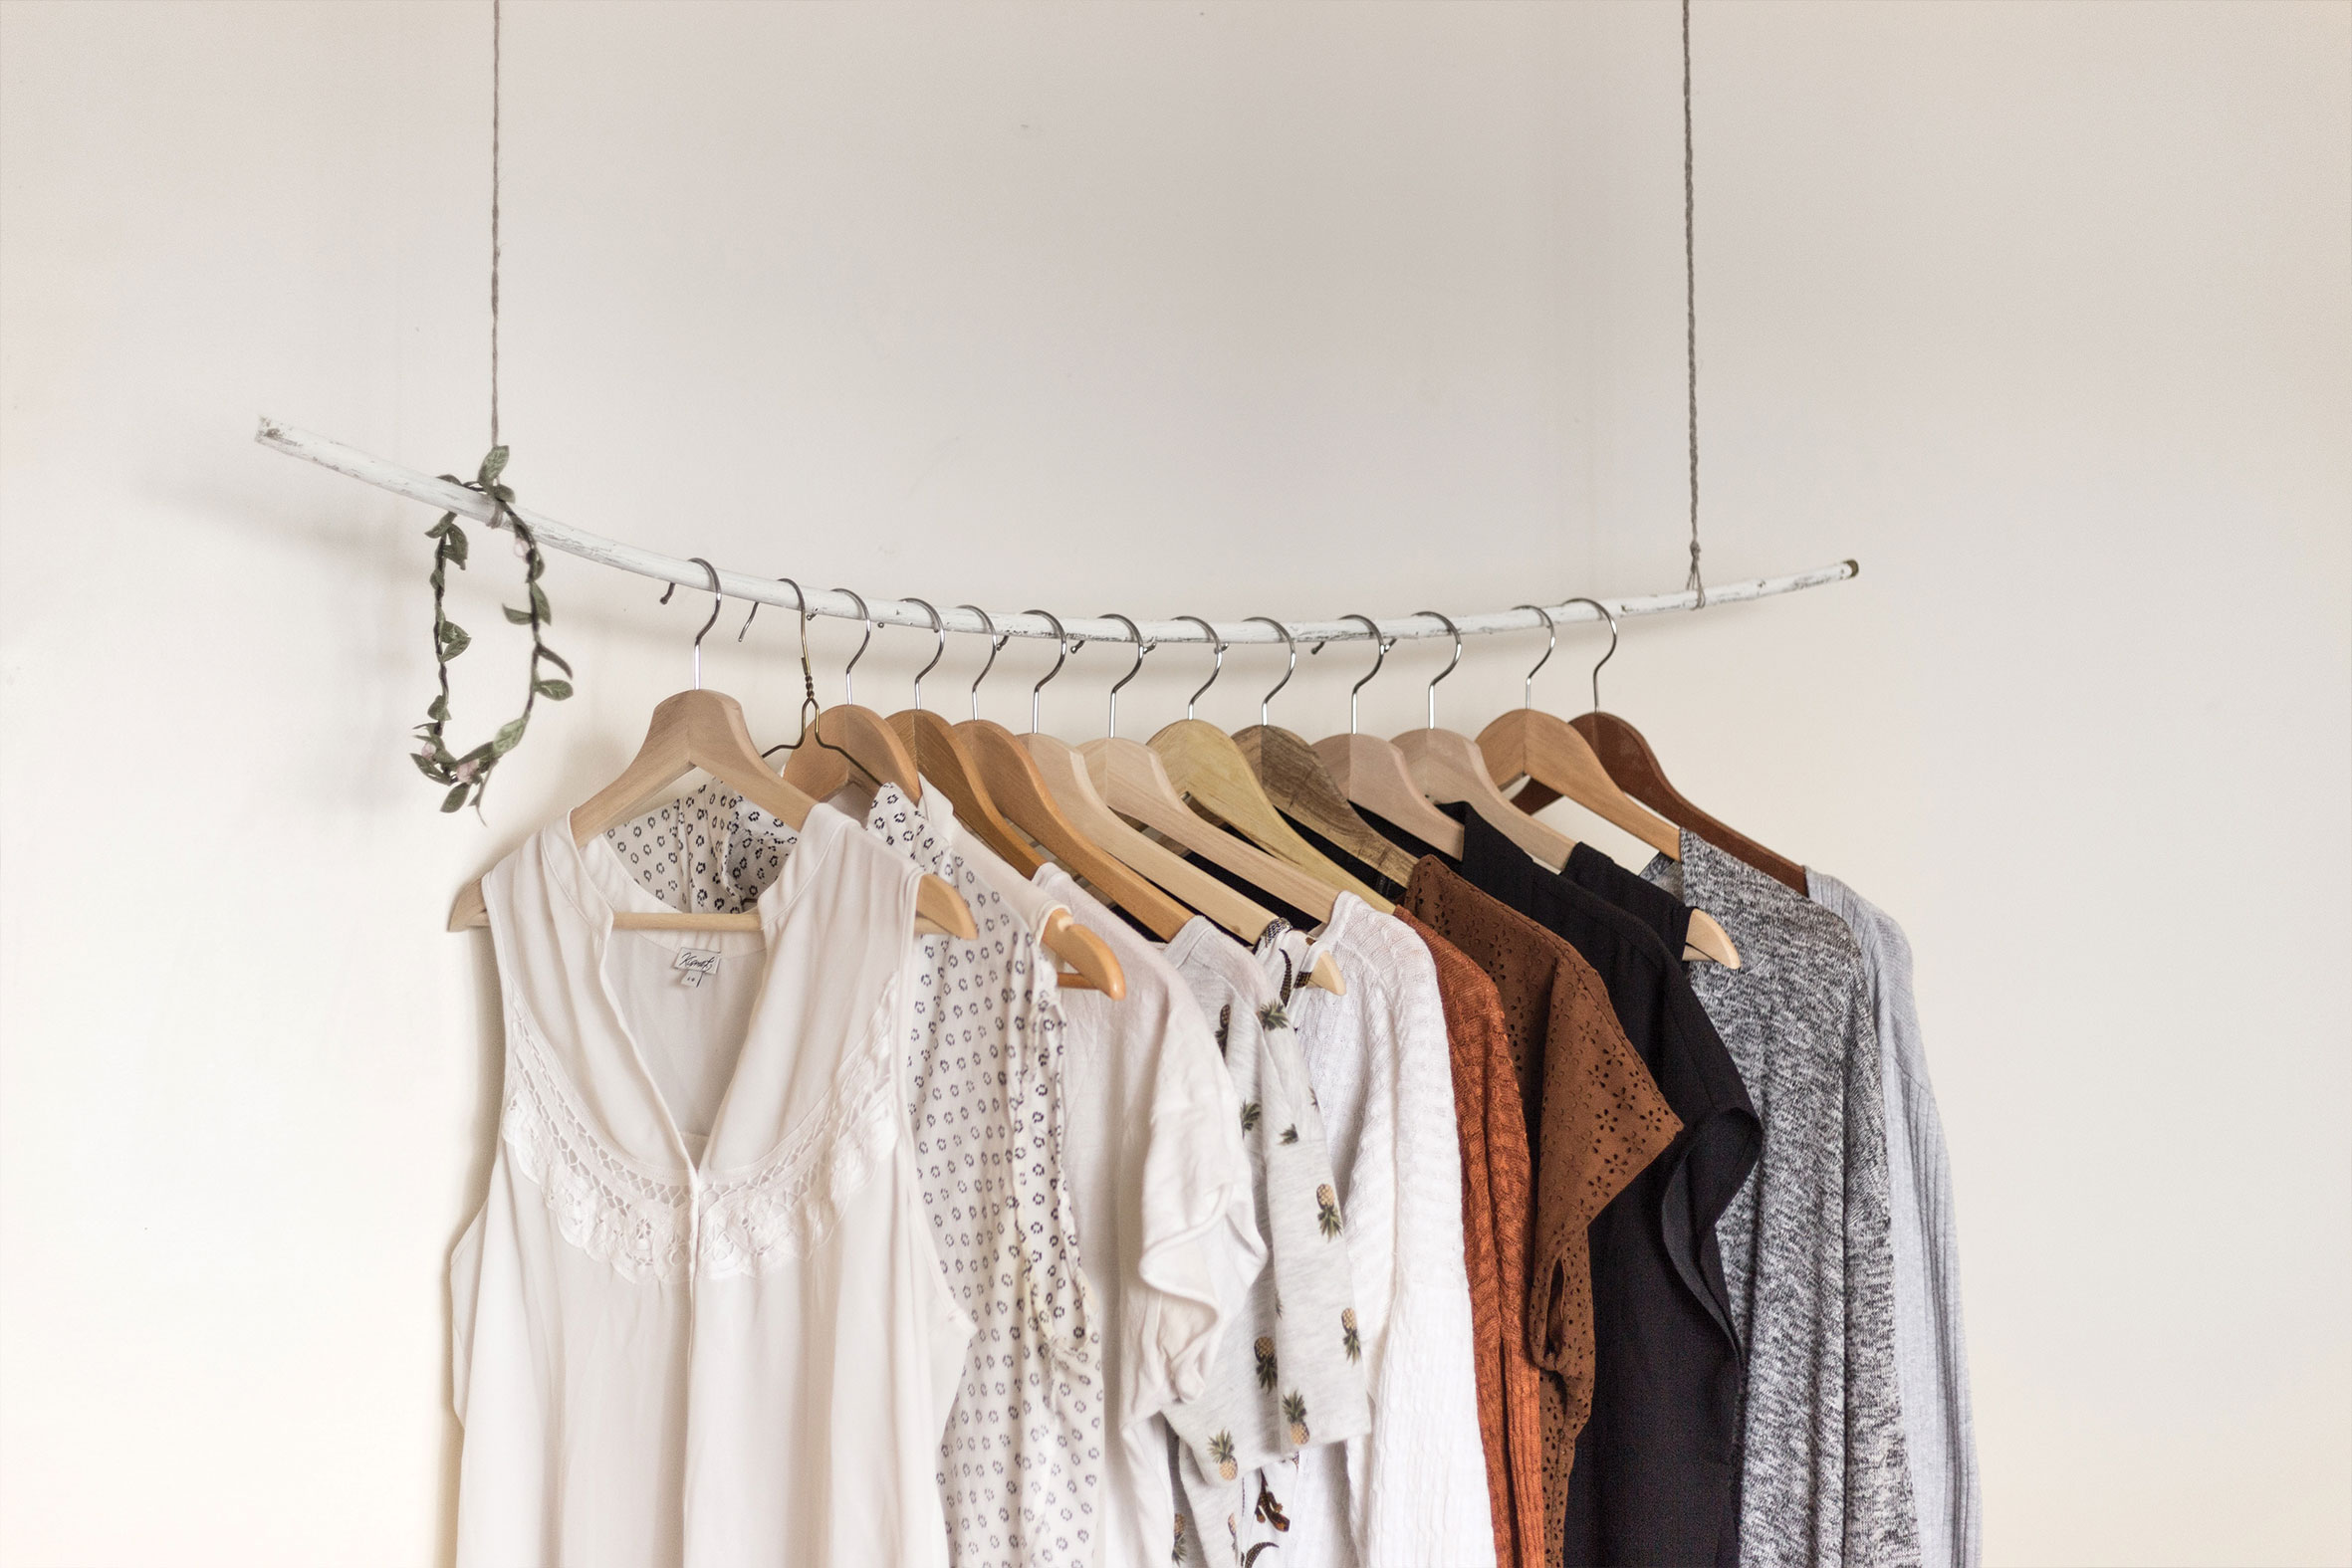 https://www.rabbitmovers.com/wp-content/uploads/2020/11/clothes-on-hangers.jpg